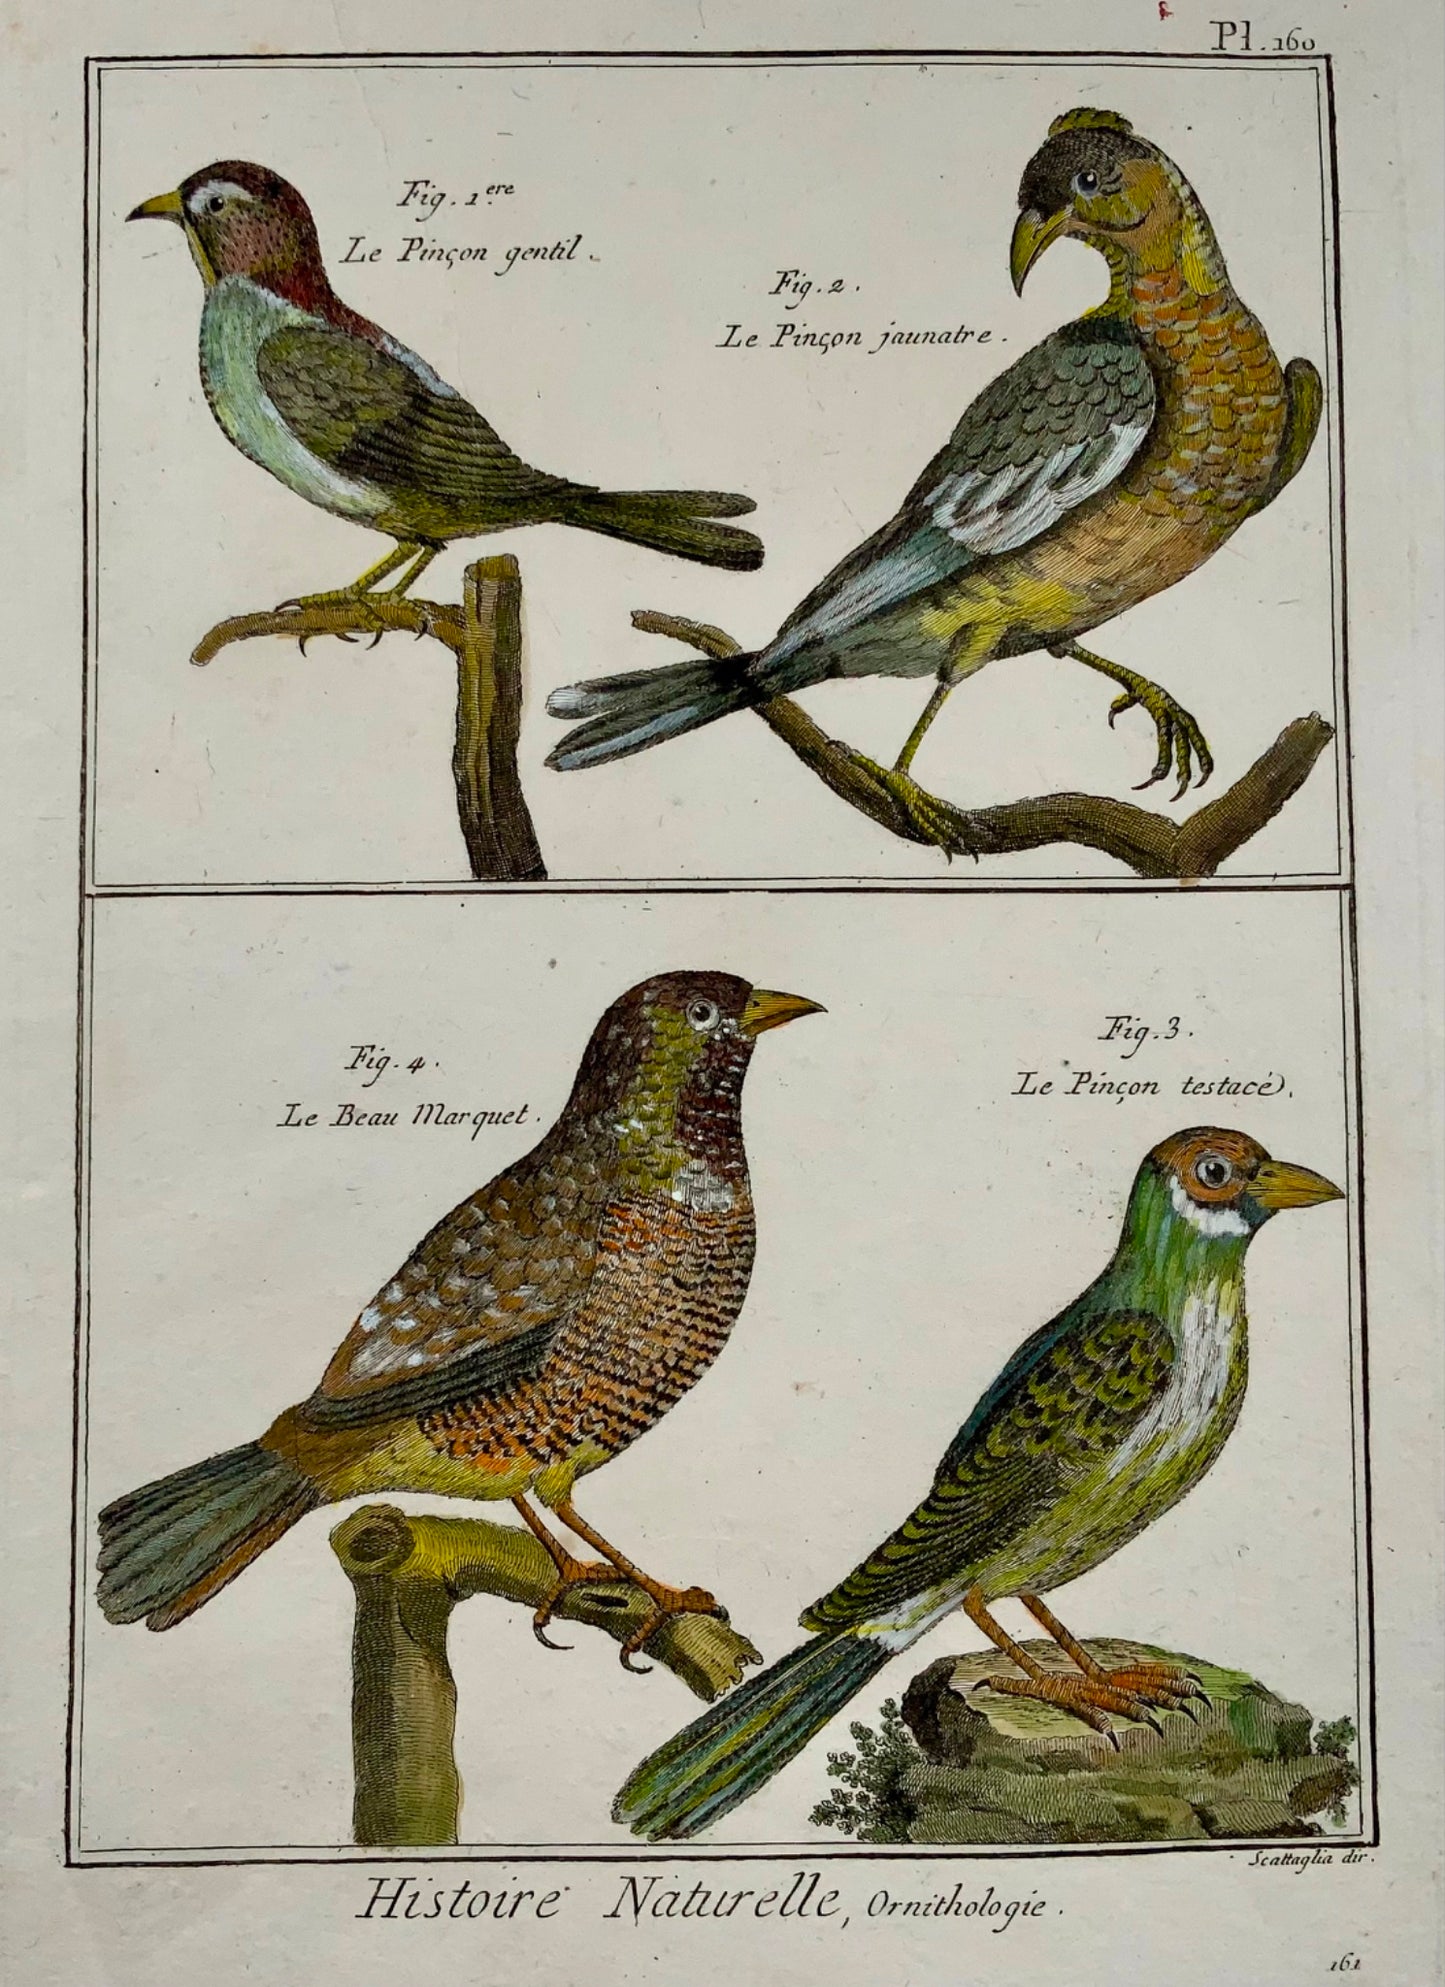 1789 Pinson, Benard sc. in-quarto, couleur à la main, gravure, ornithologie